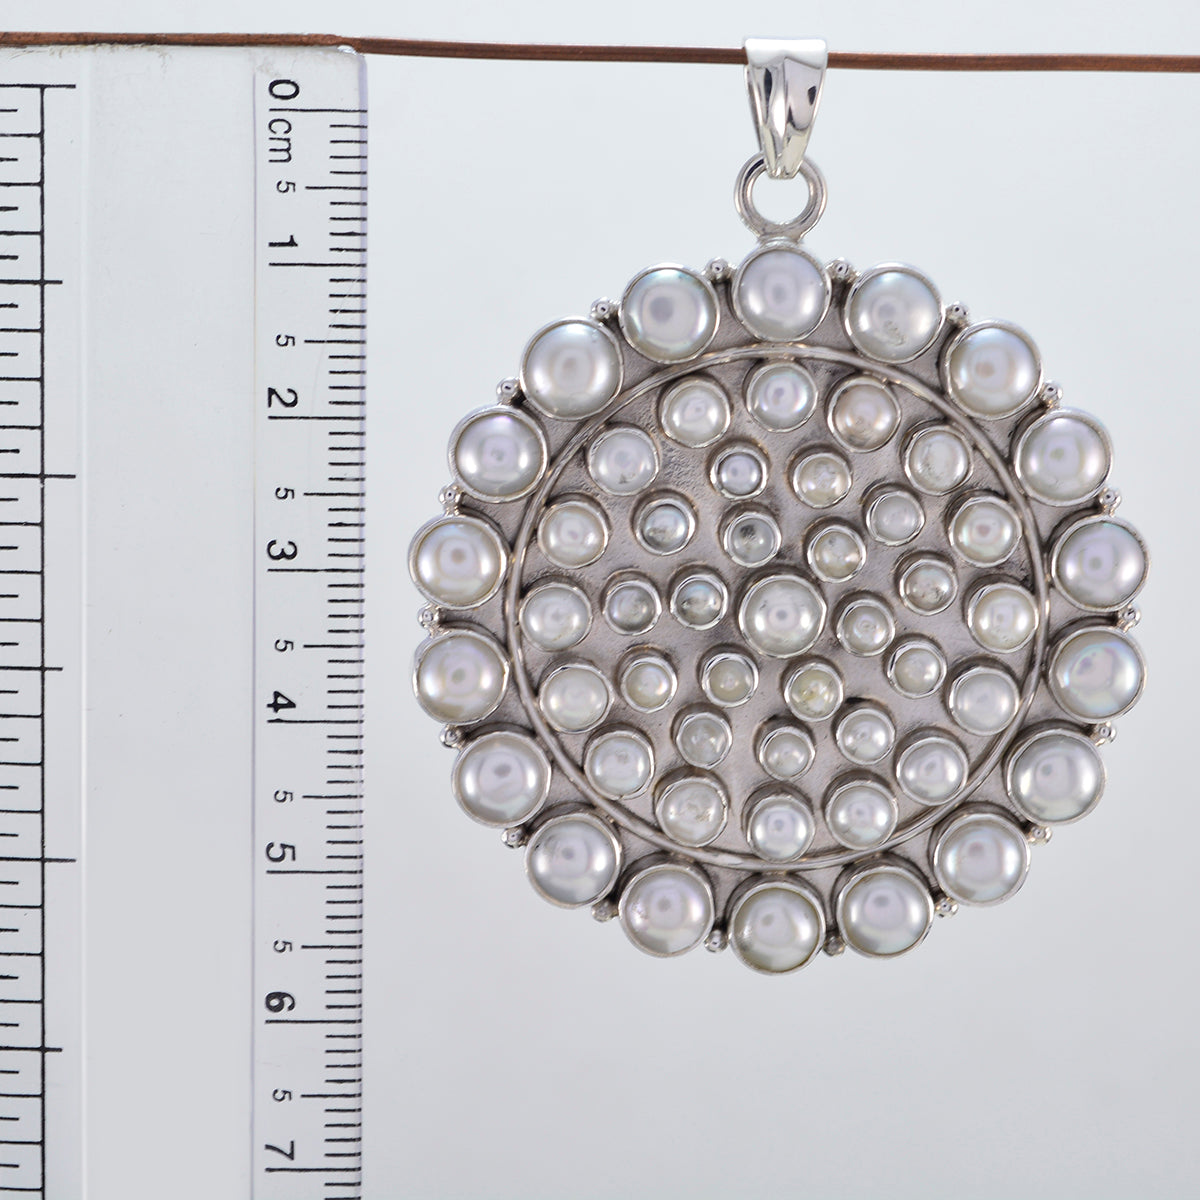 Riyo Natural Gemstone Round Cabochon White Pearl 925 Silver Pendant gift for st. patricks day